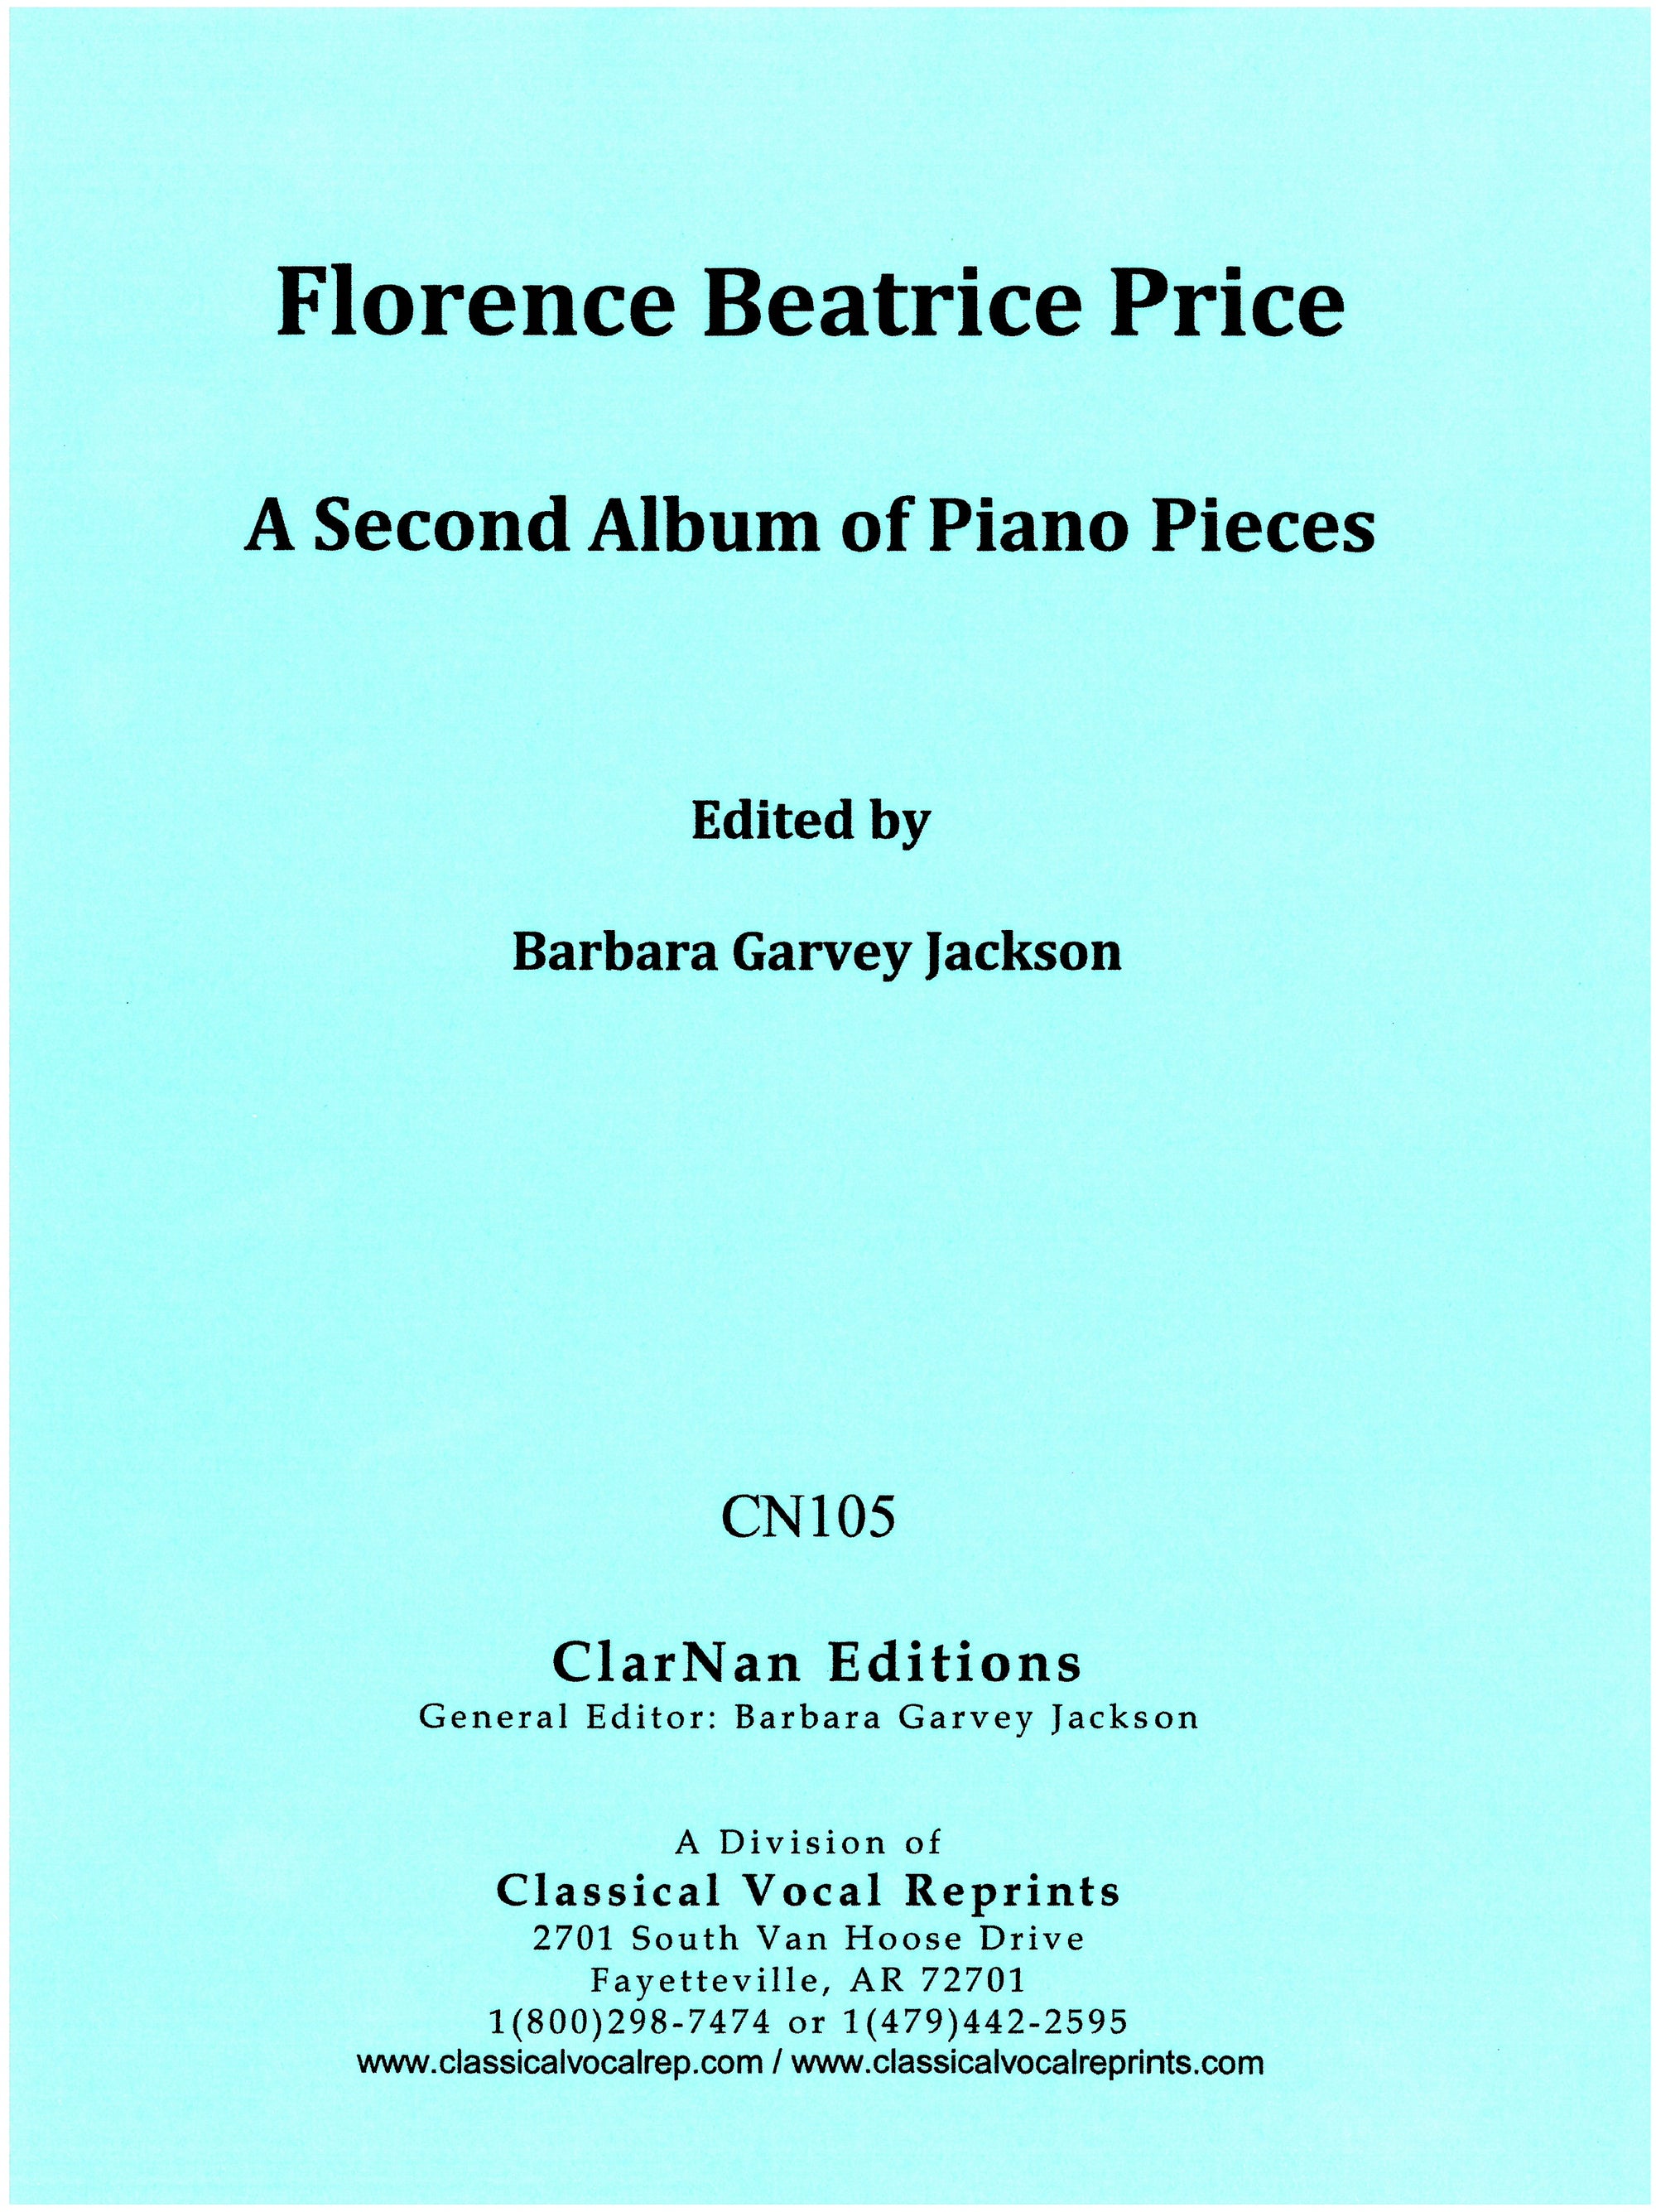 Price: A Second Album of Piano Pieces